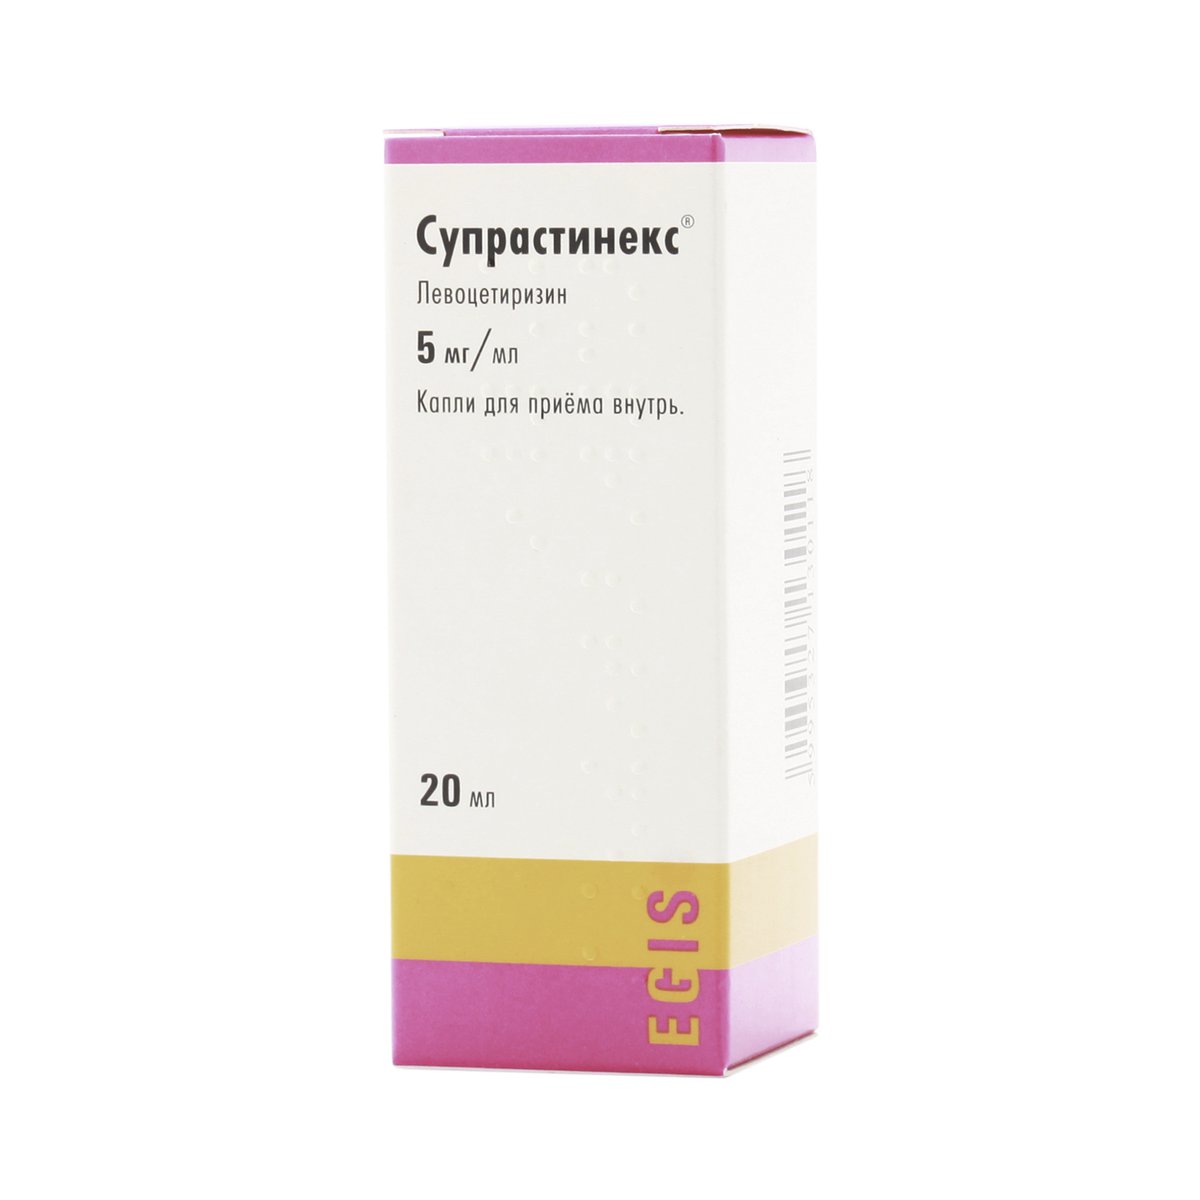 Супрастинекс (капли, 20 мл, 5 мг/мл, для приема внутрь) - цена,  .